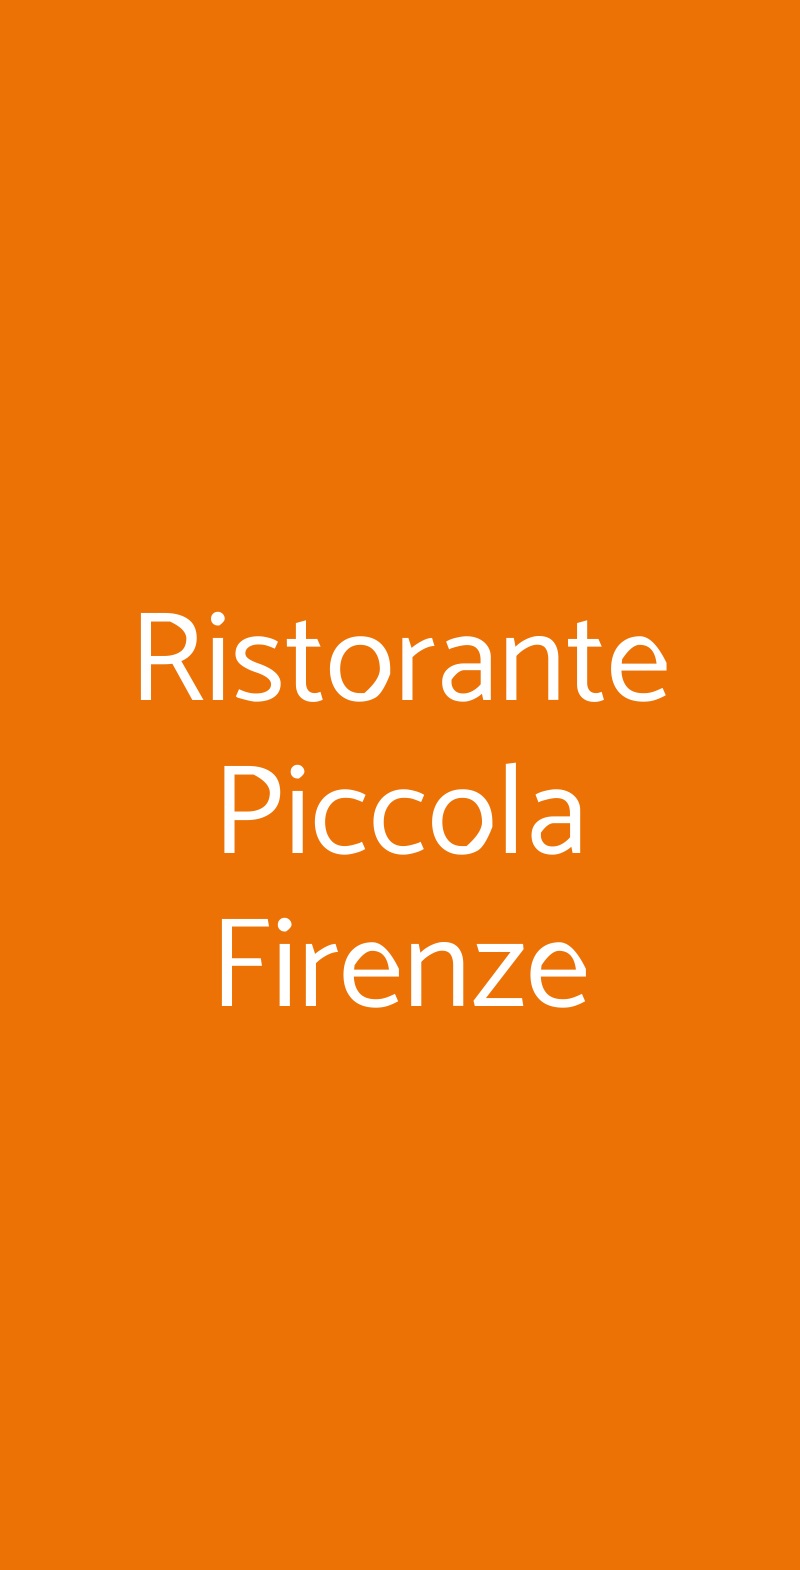 Ristorante Piccola Firenze Firenzuola menù 1 pagina